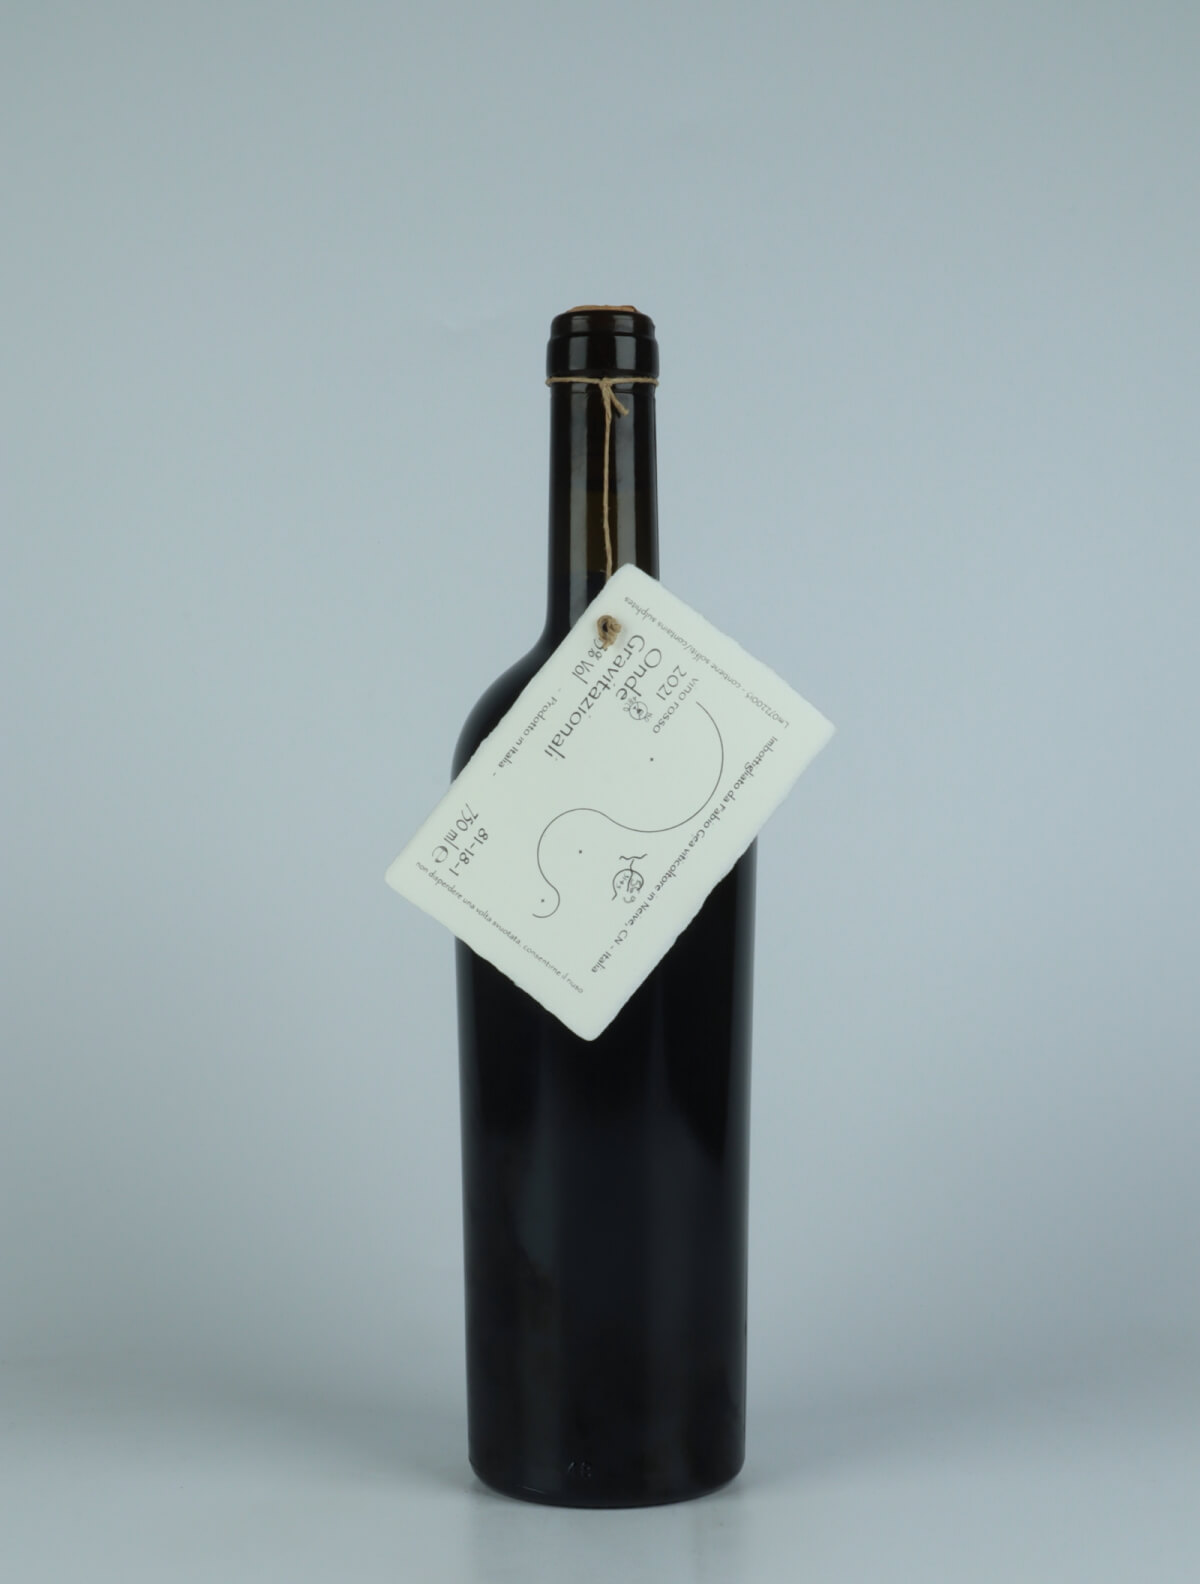 A bottle 2021 Onde Gravitazionali 81-18-1 Red wine from Fabio Gea, Piedmont in Italy